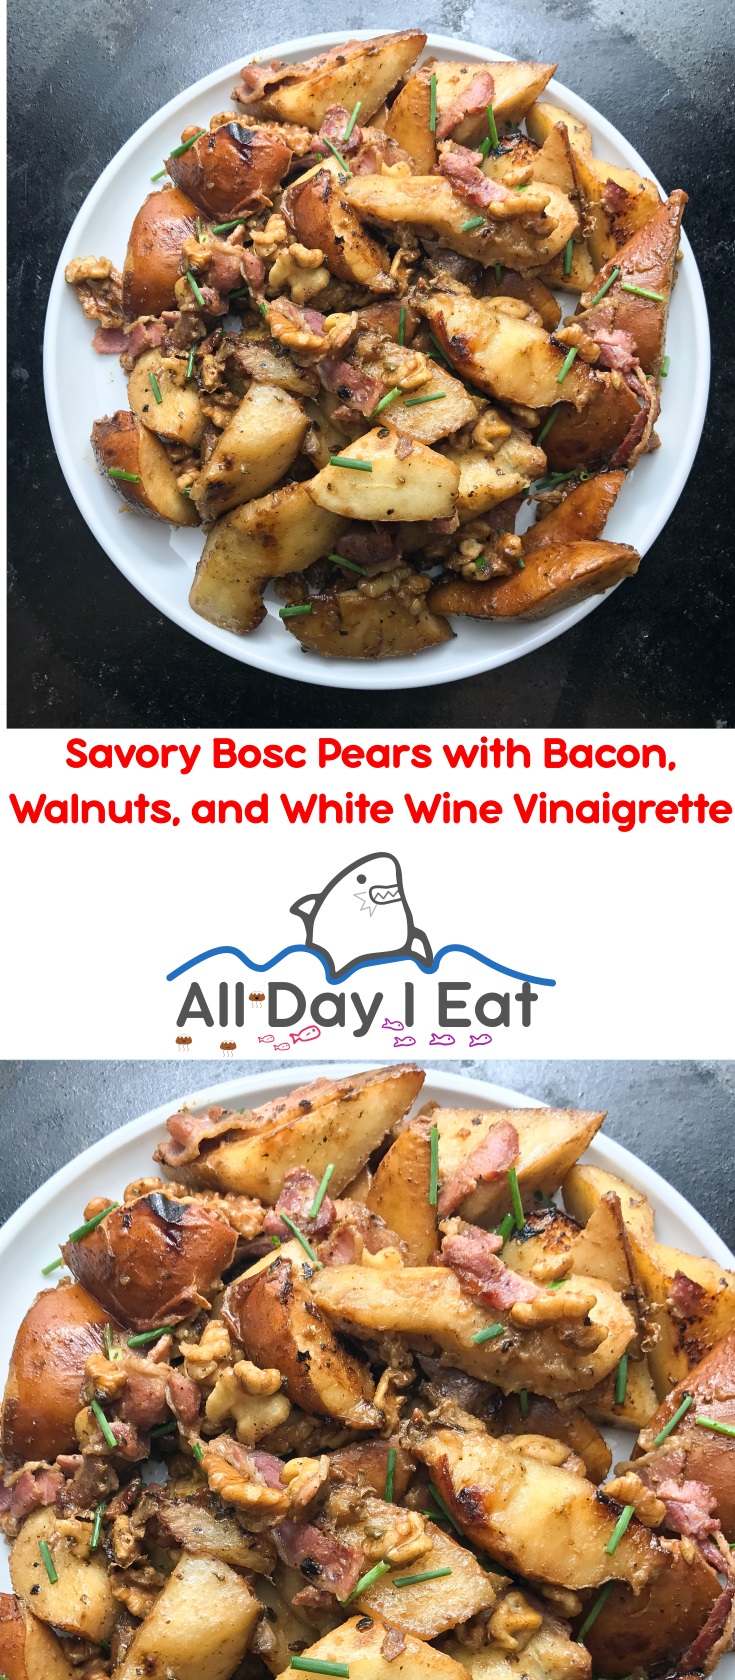 Savory Bosc Pears with Bacon, Walnuts, and White Wine Vinaigrette | www.alldayieat.com